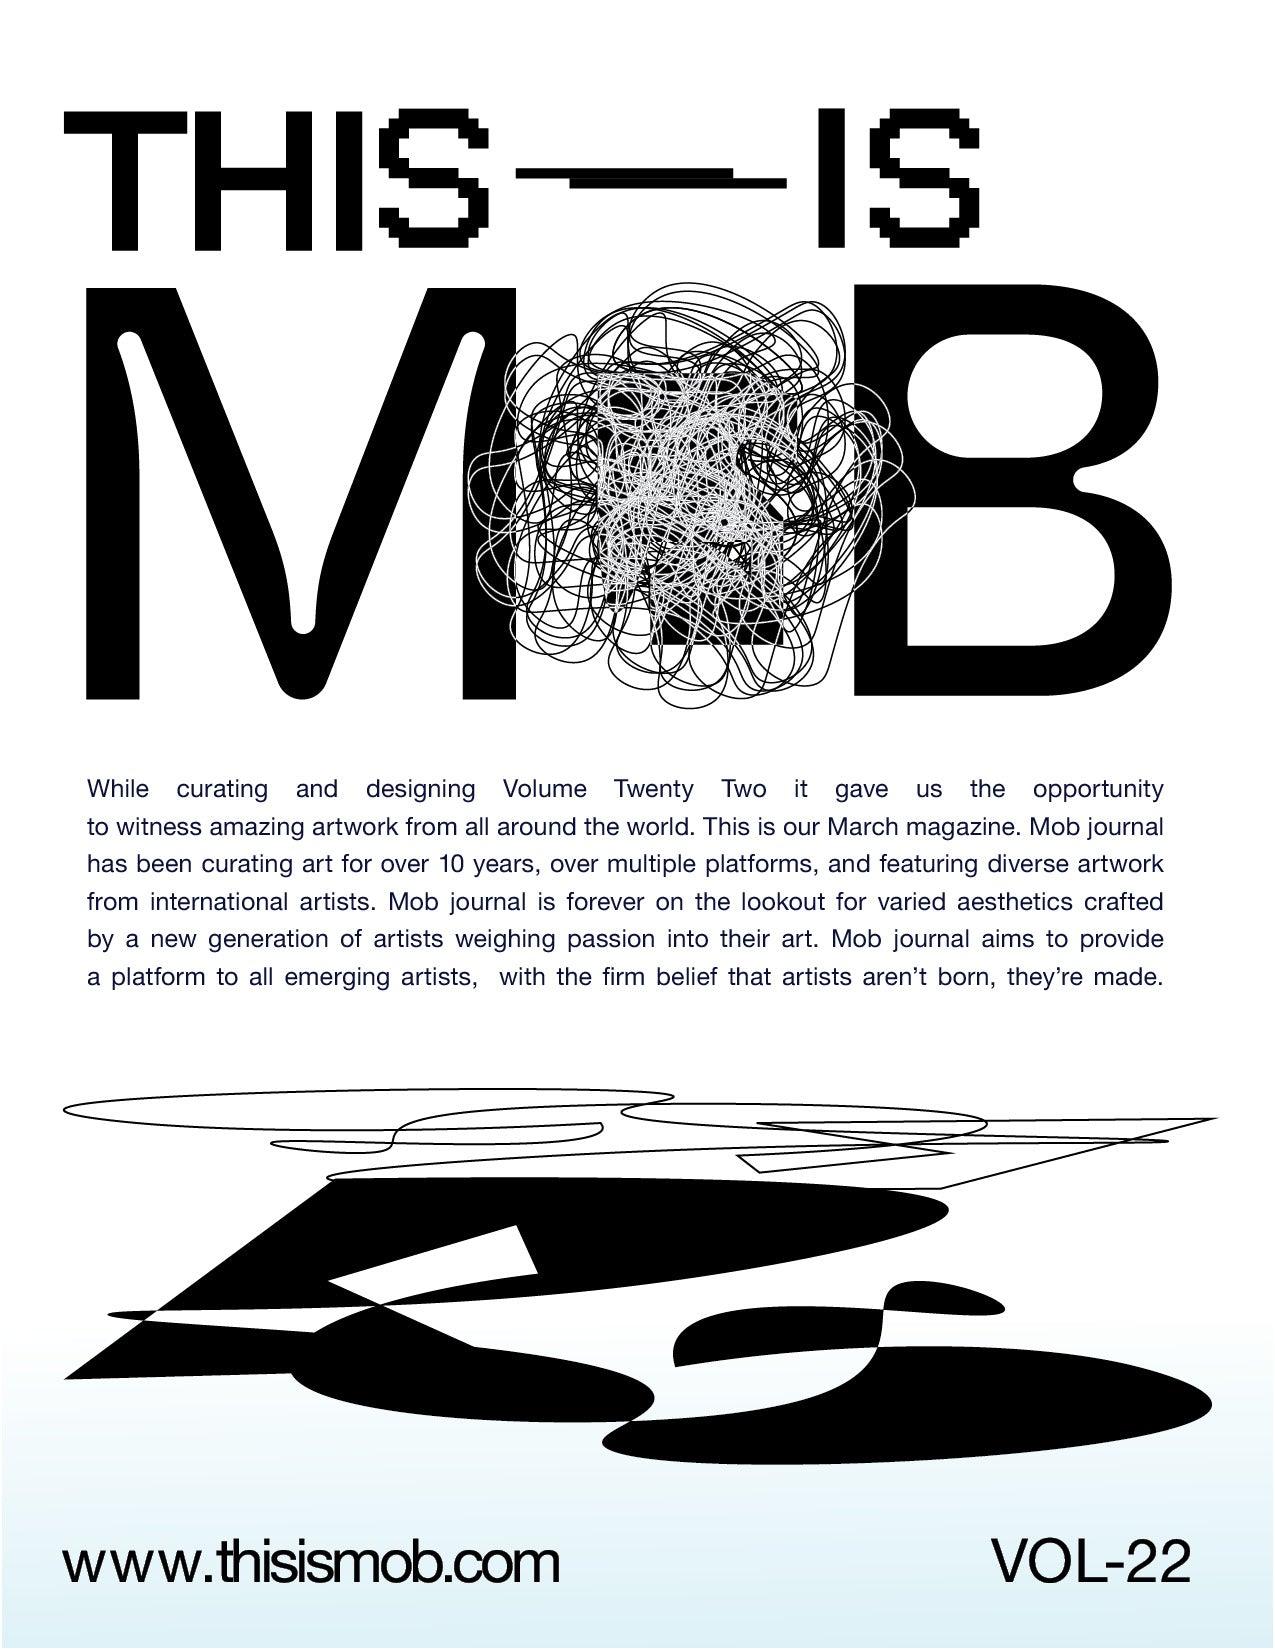 MOB JOURNAL | VOLUME TWENTY TWO | ISSUE #21 - Mob Journal